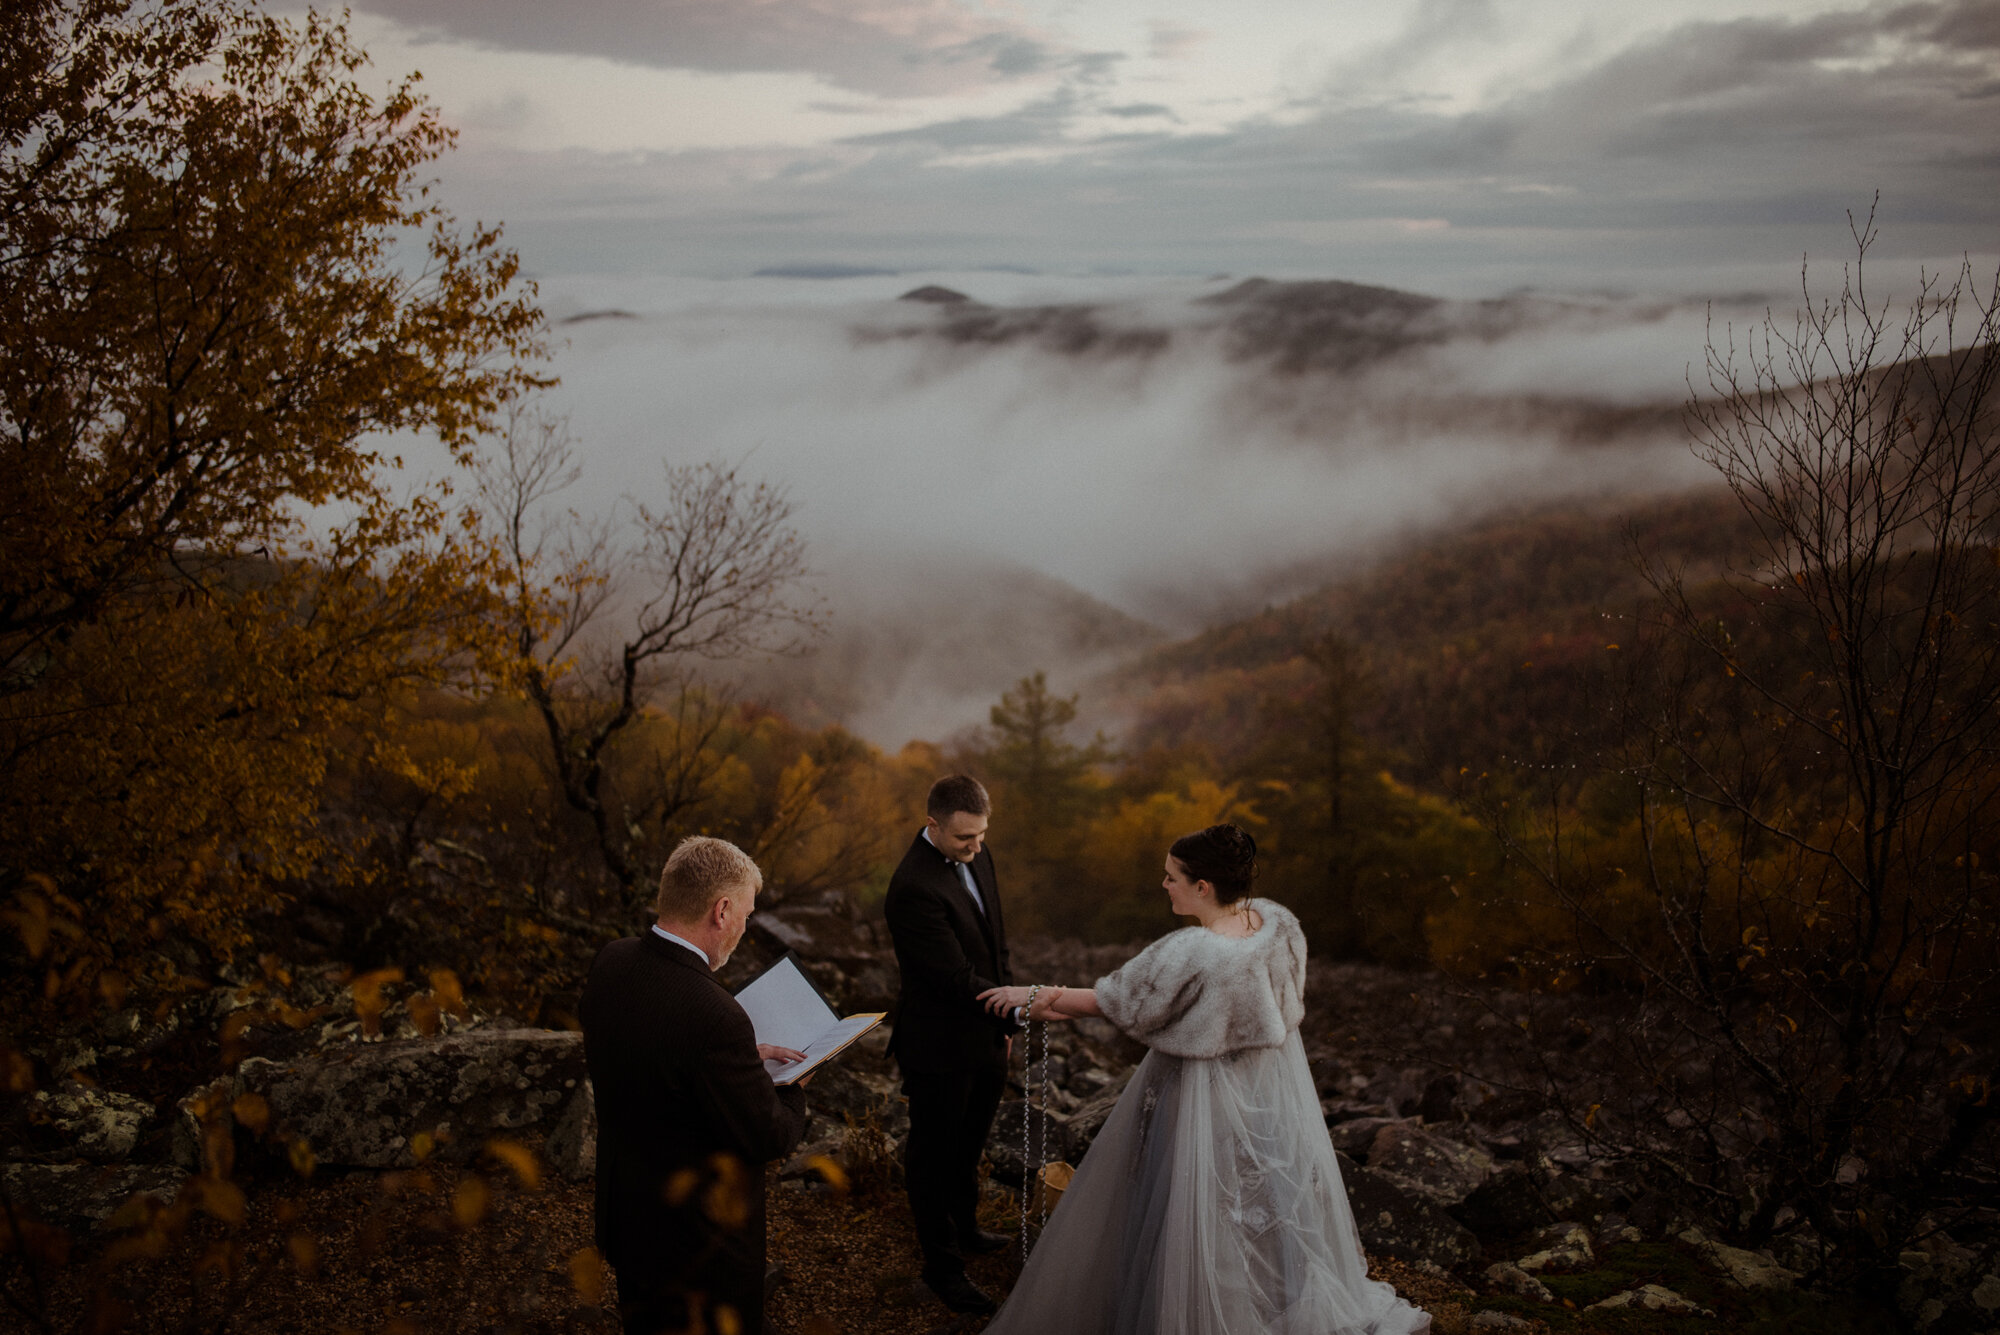 Wedding Ceremony in Shenandoah National Park - Black Rock Hike Elopement - Blue Ridge Parkway Wedding in the Fall - White Sails Creative_4.jpg